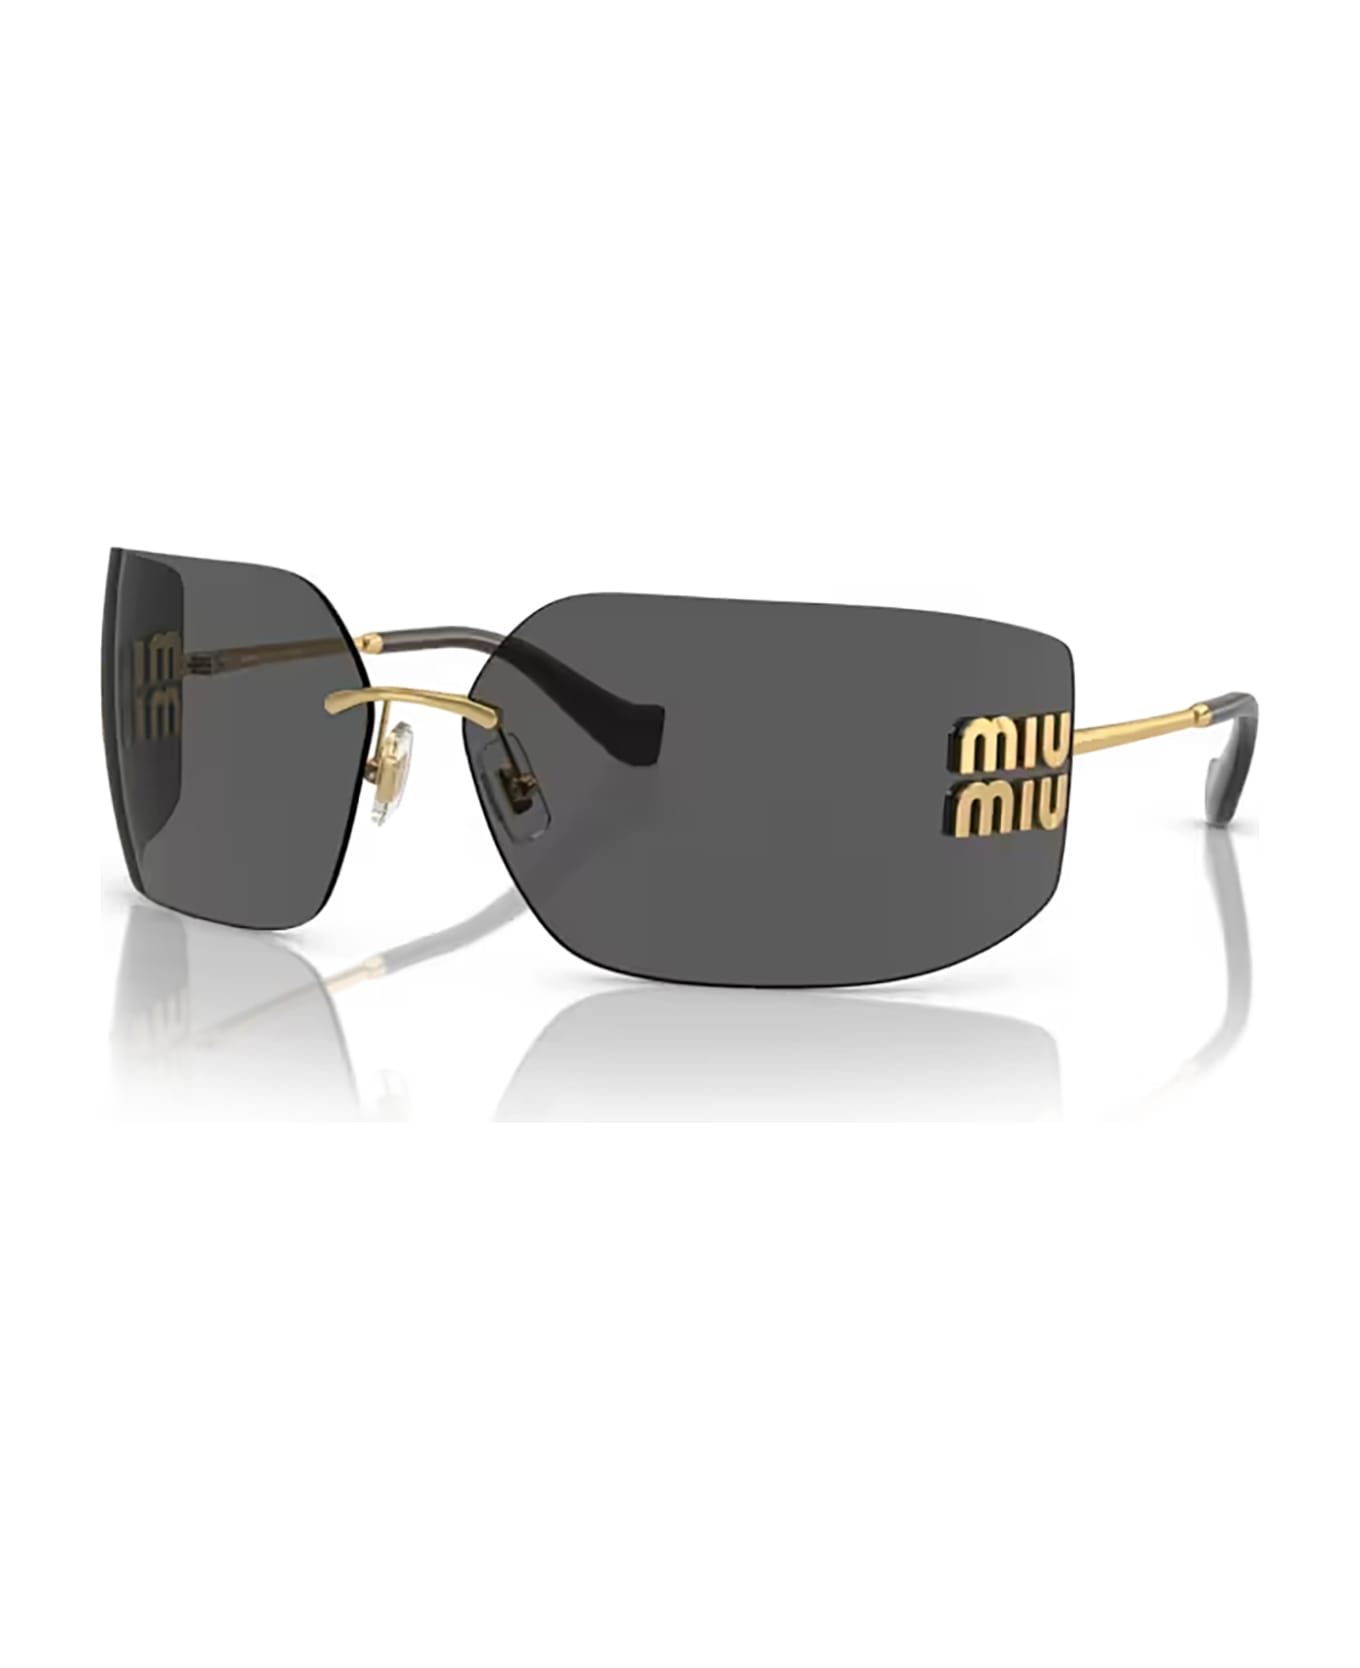 Miu Miu Eyewear Mu 54ys Gold Sunglasses - Gold